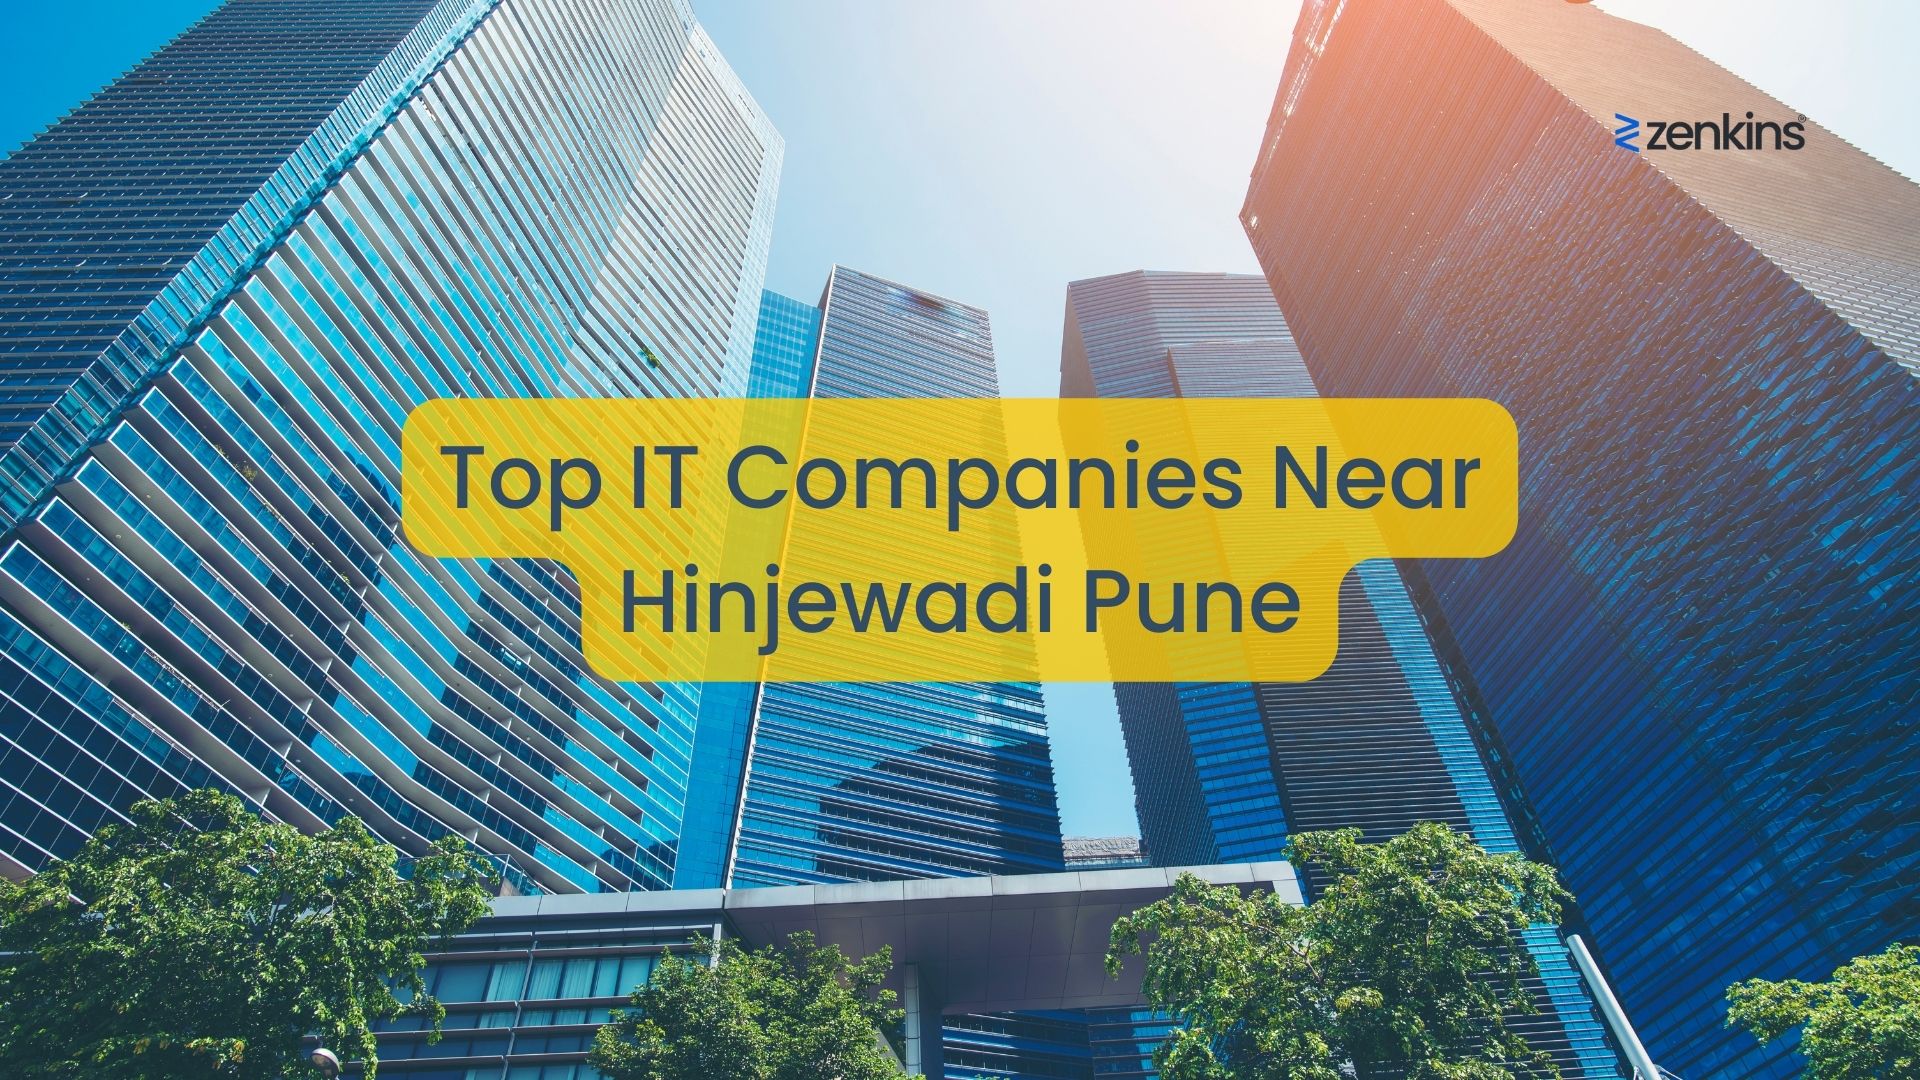 Top IT Companies Near Hinjewadi Pune